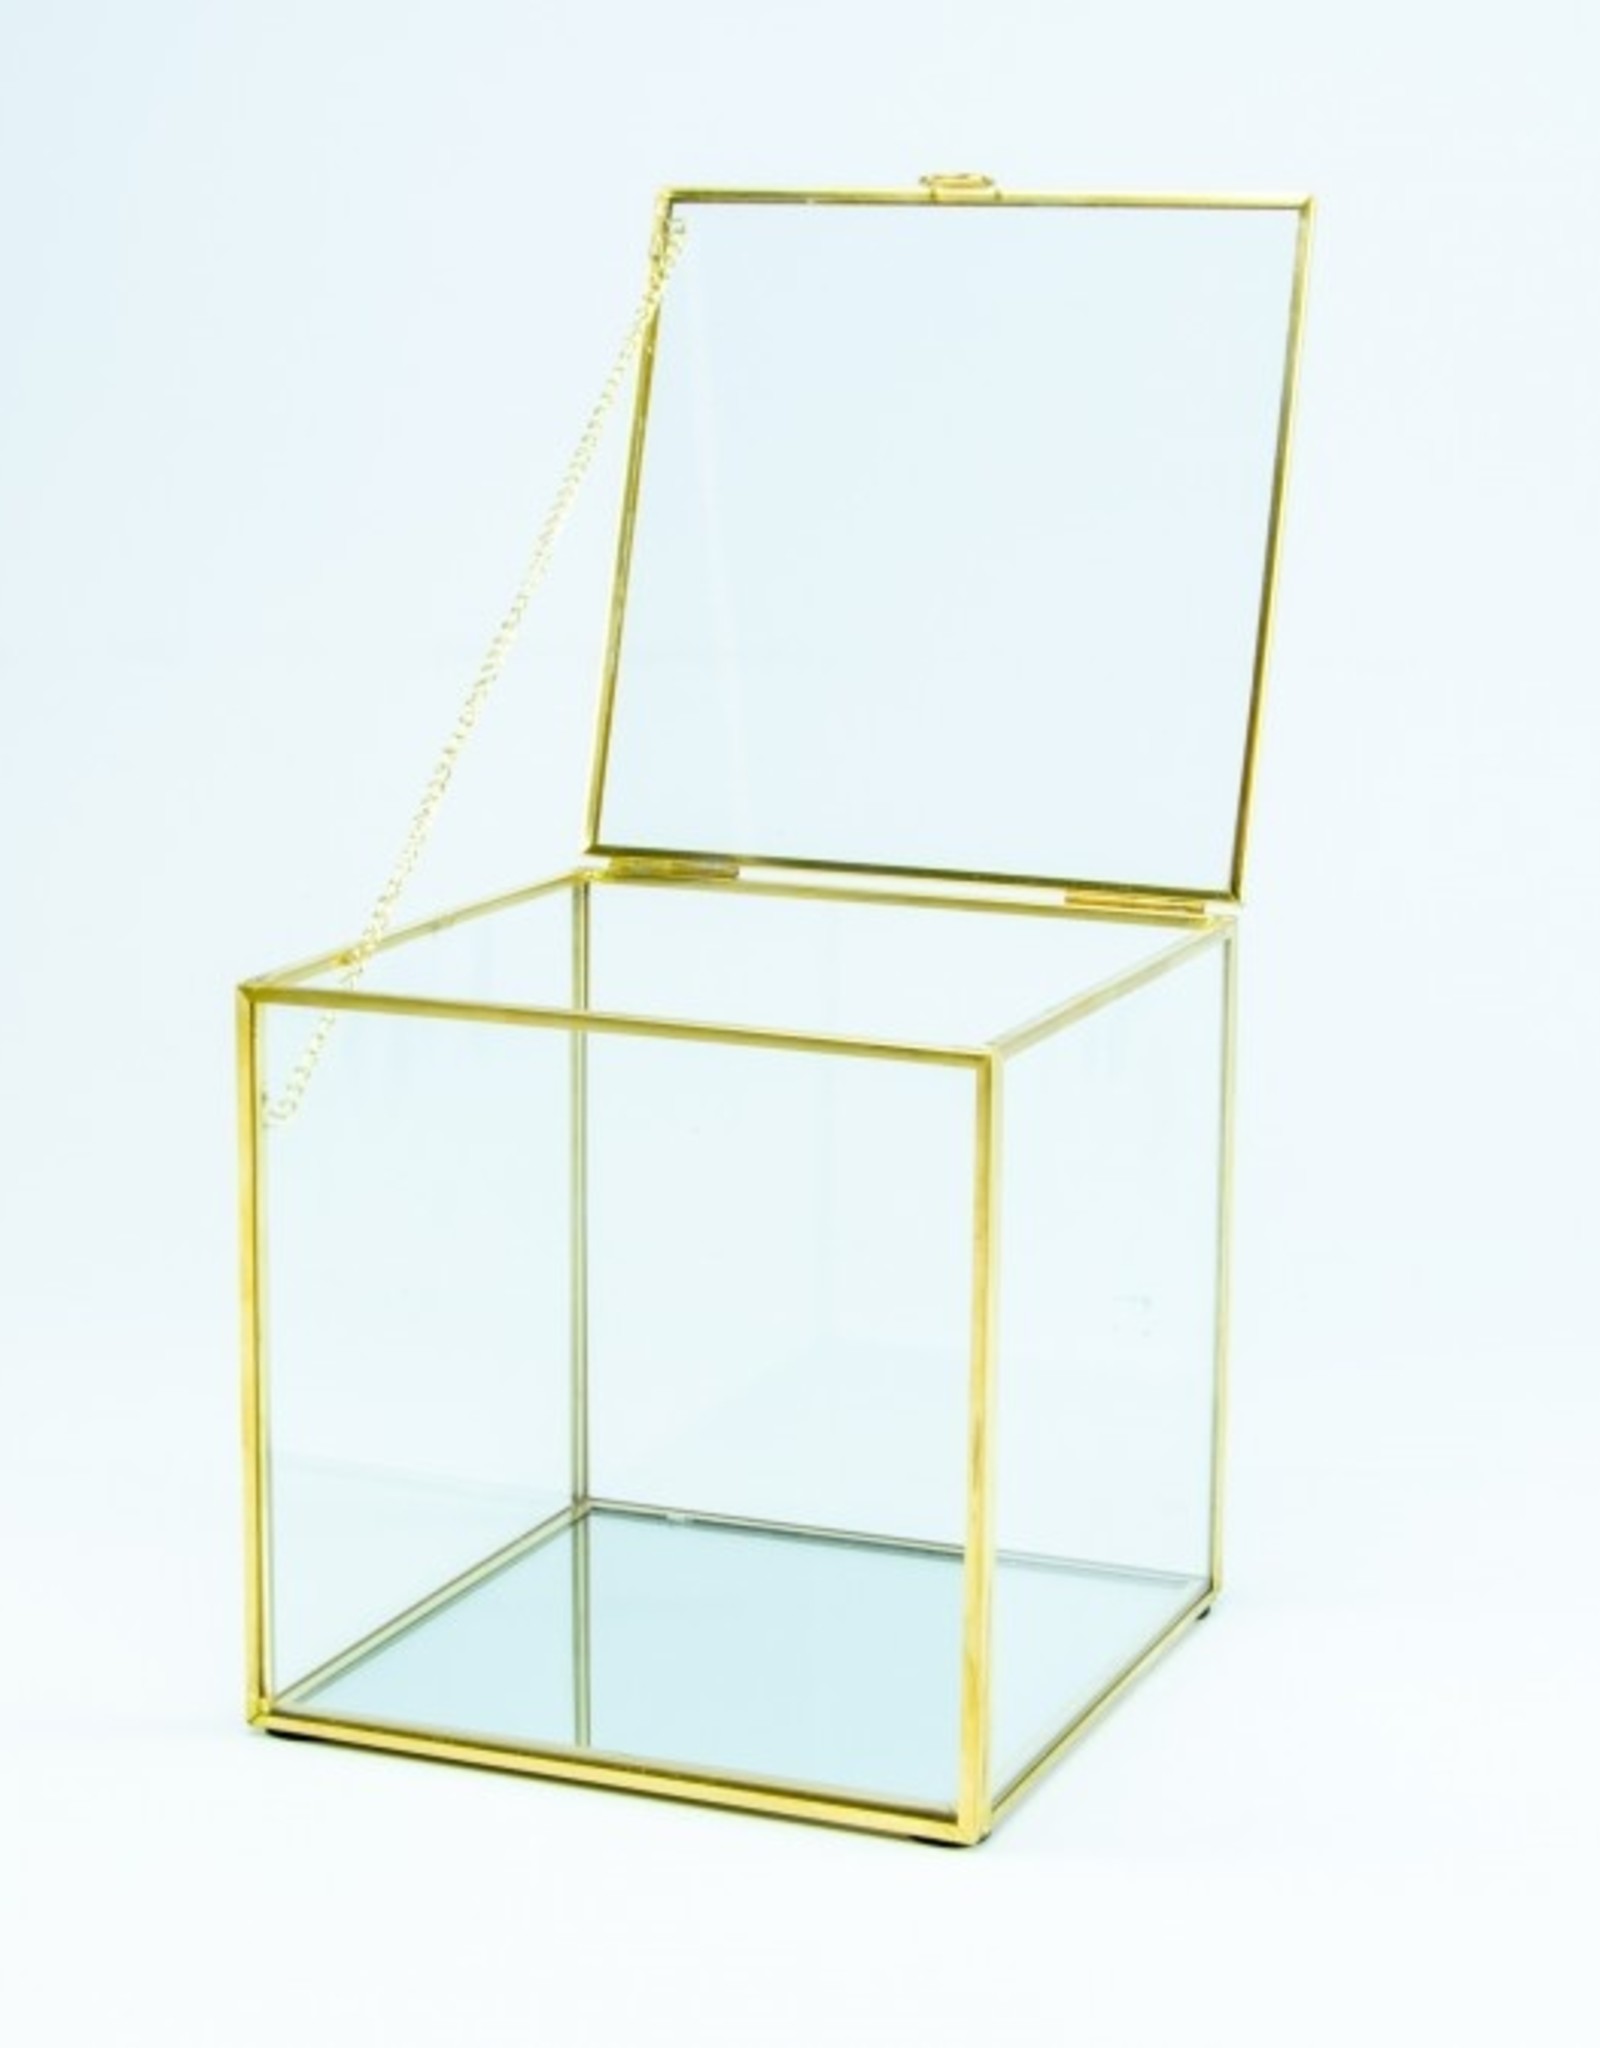 Giftbox kubus glas 15cm x 15cm x 15cm goud